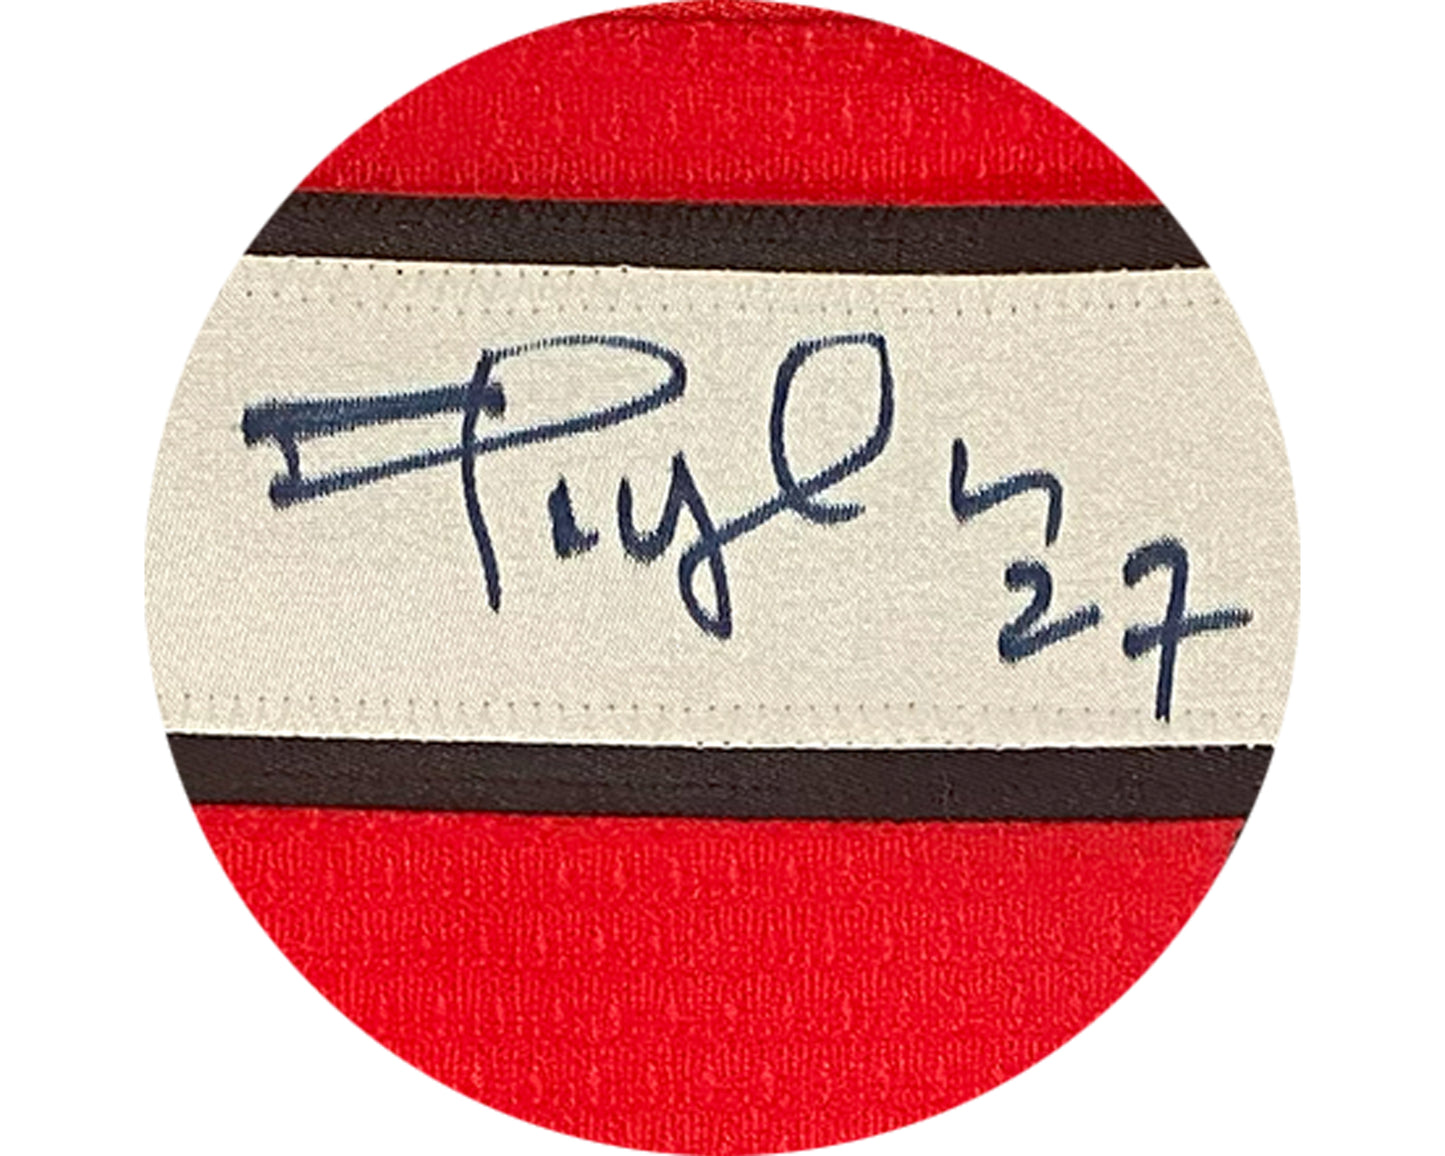 Shayne Corson Autographed Team Canada Red Bauer Replica Jersey